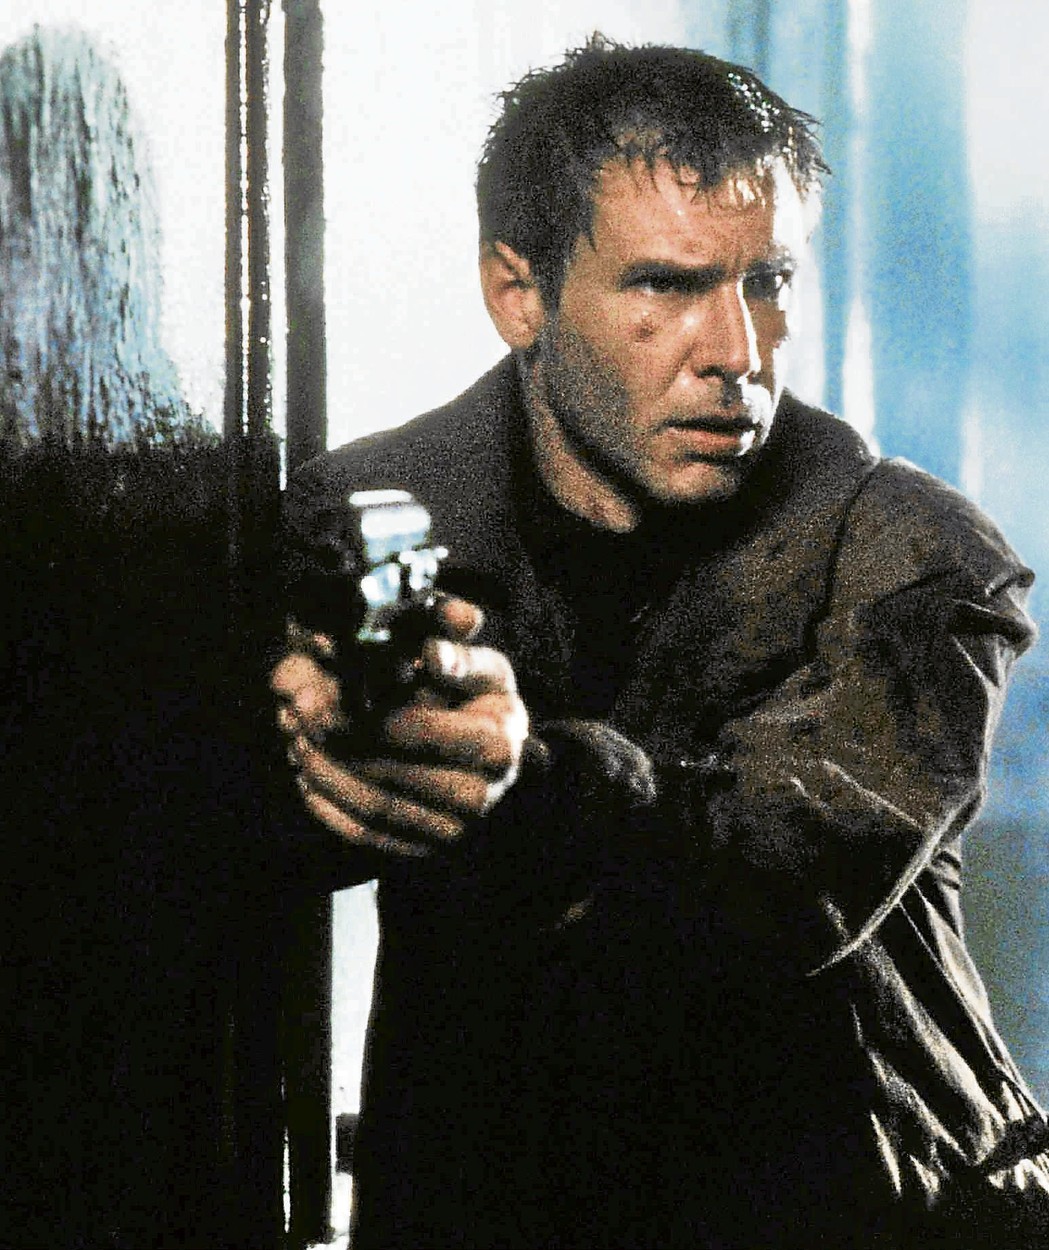 Харисън Форд в "Blade Runner" (1982)